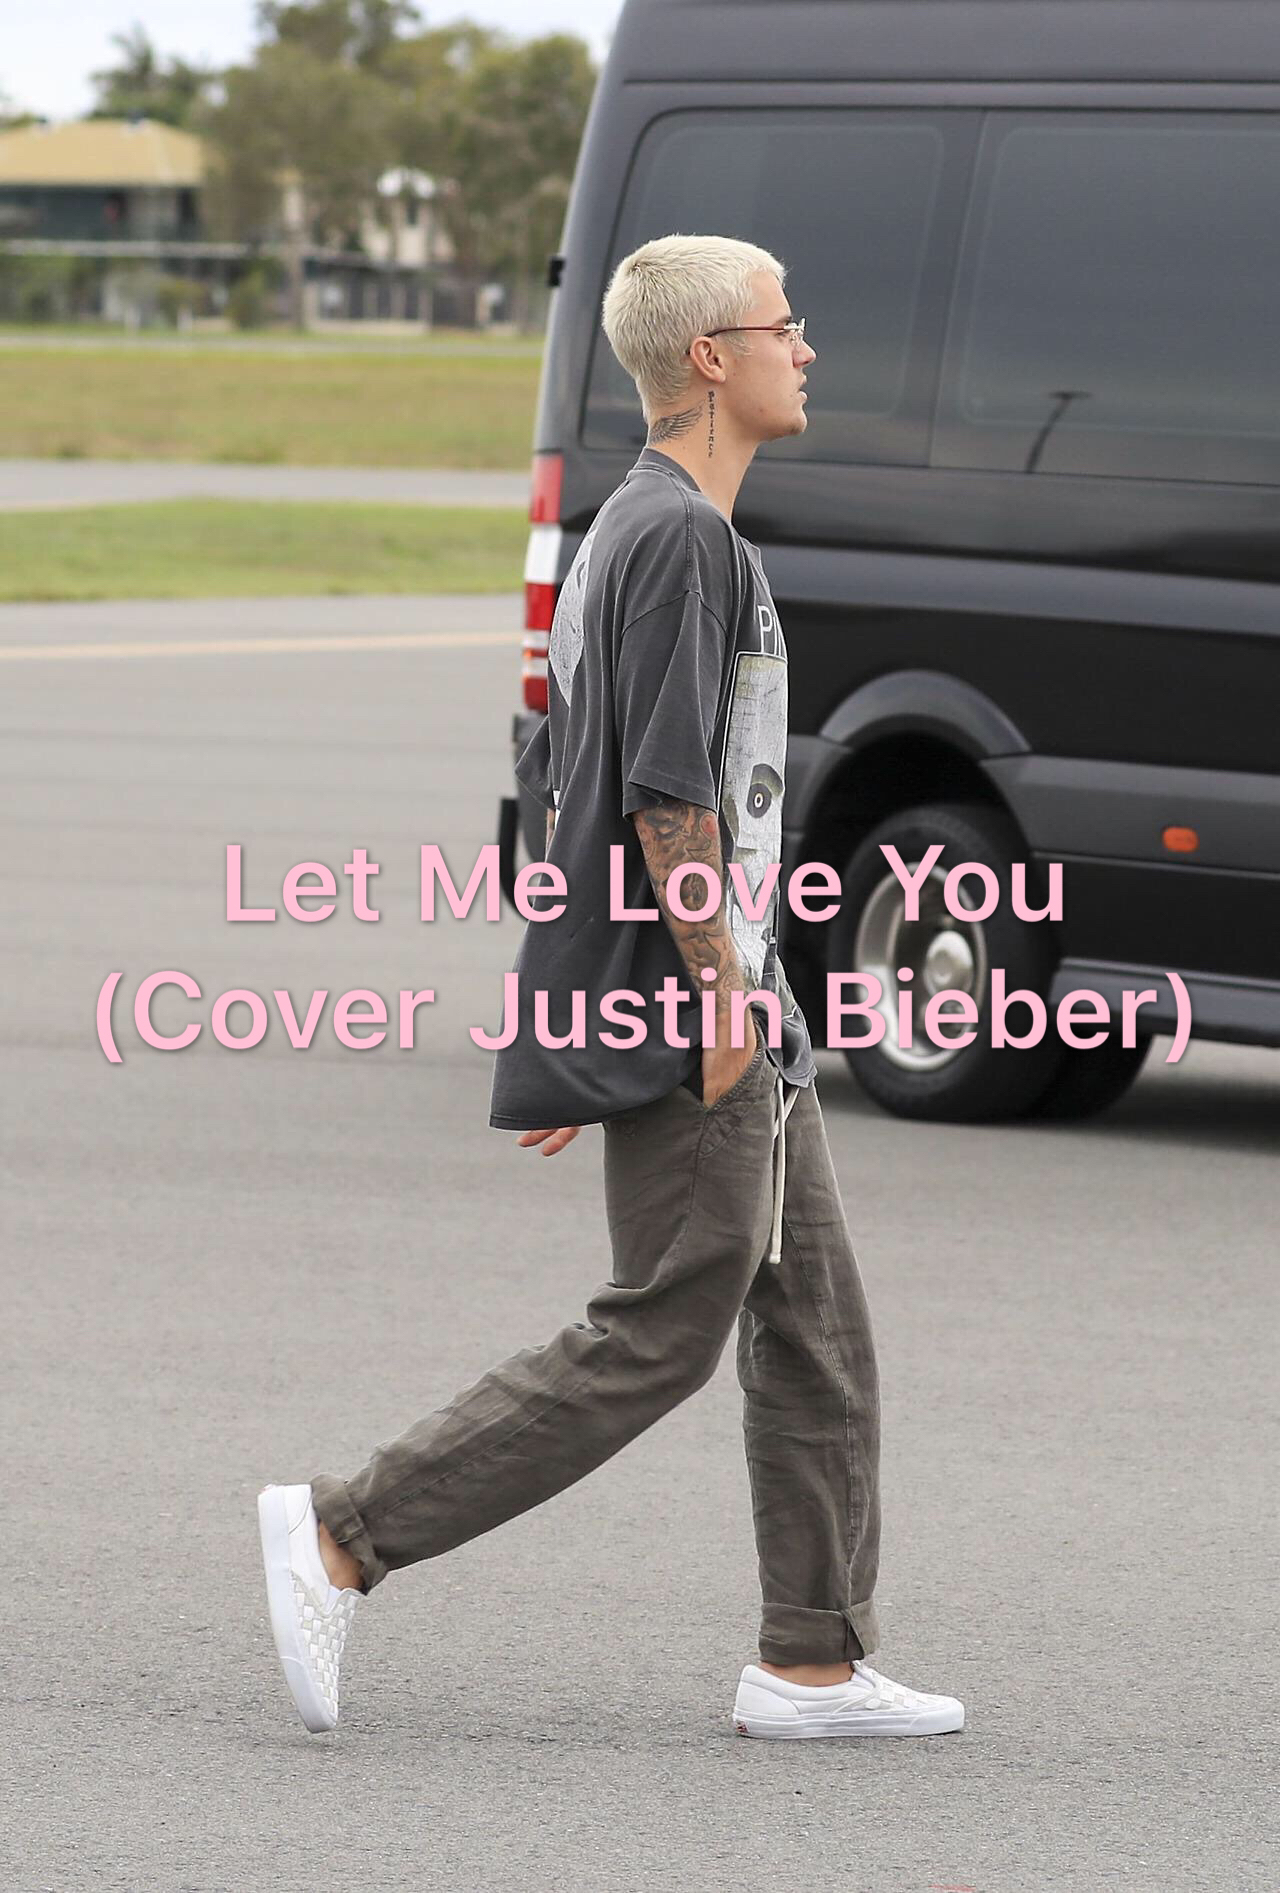 Let Me Love You  Cover Justin  Bieber he sheng ban